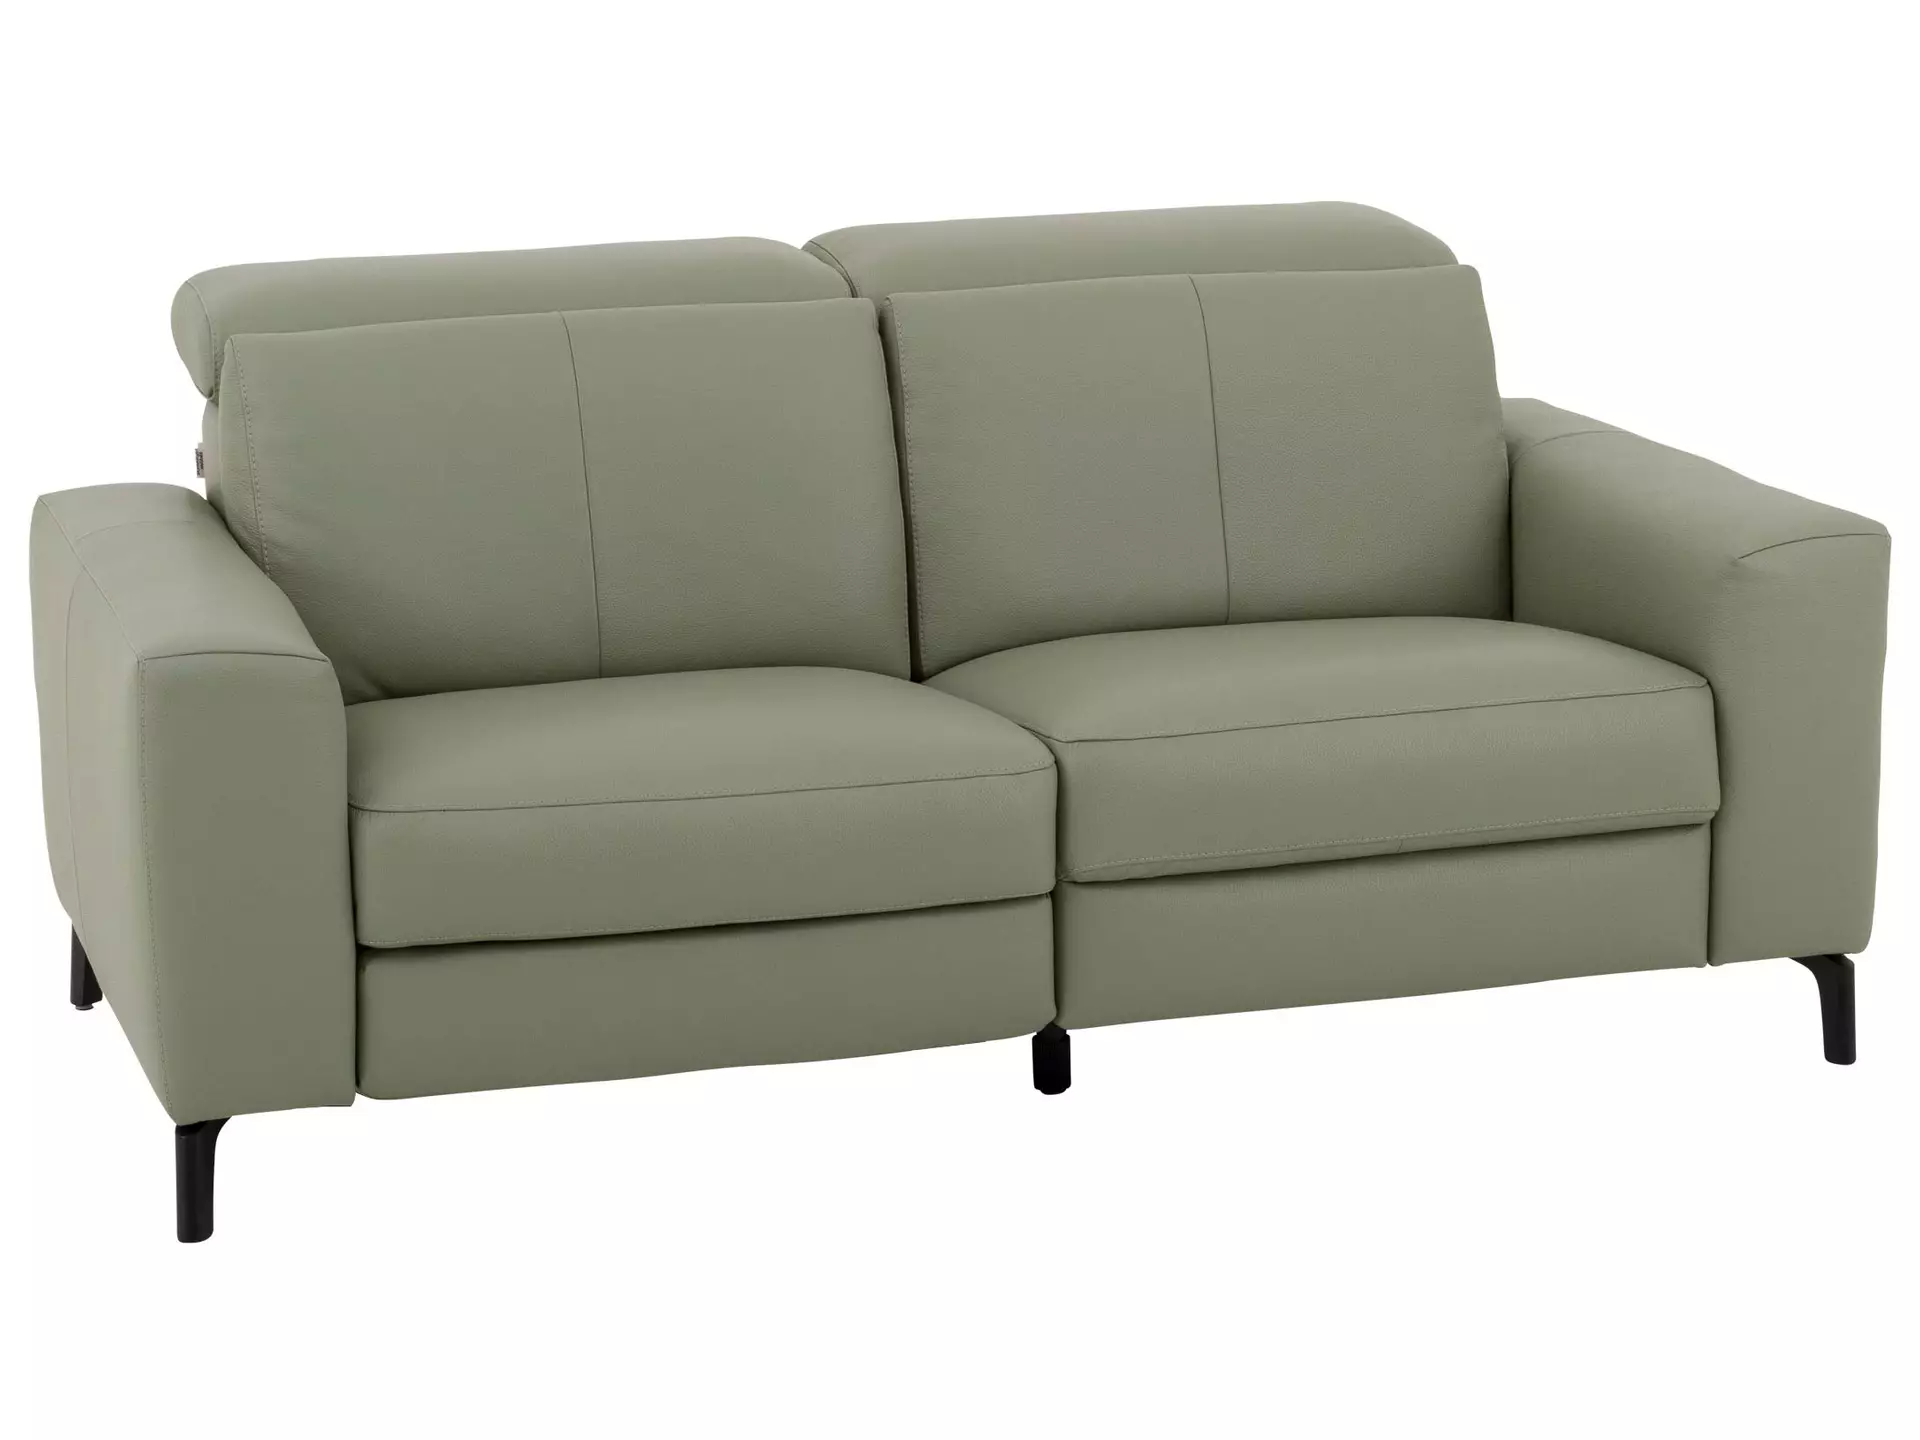 Sofa Caladja B: 190 cm Rom / Farbe: Sage / Bezugsmaterial: Leder